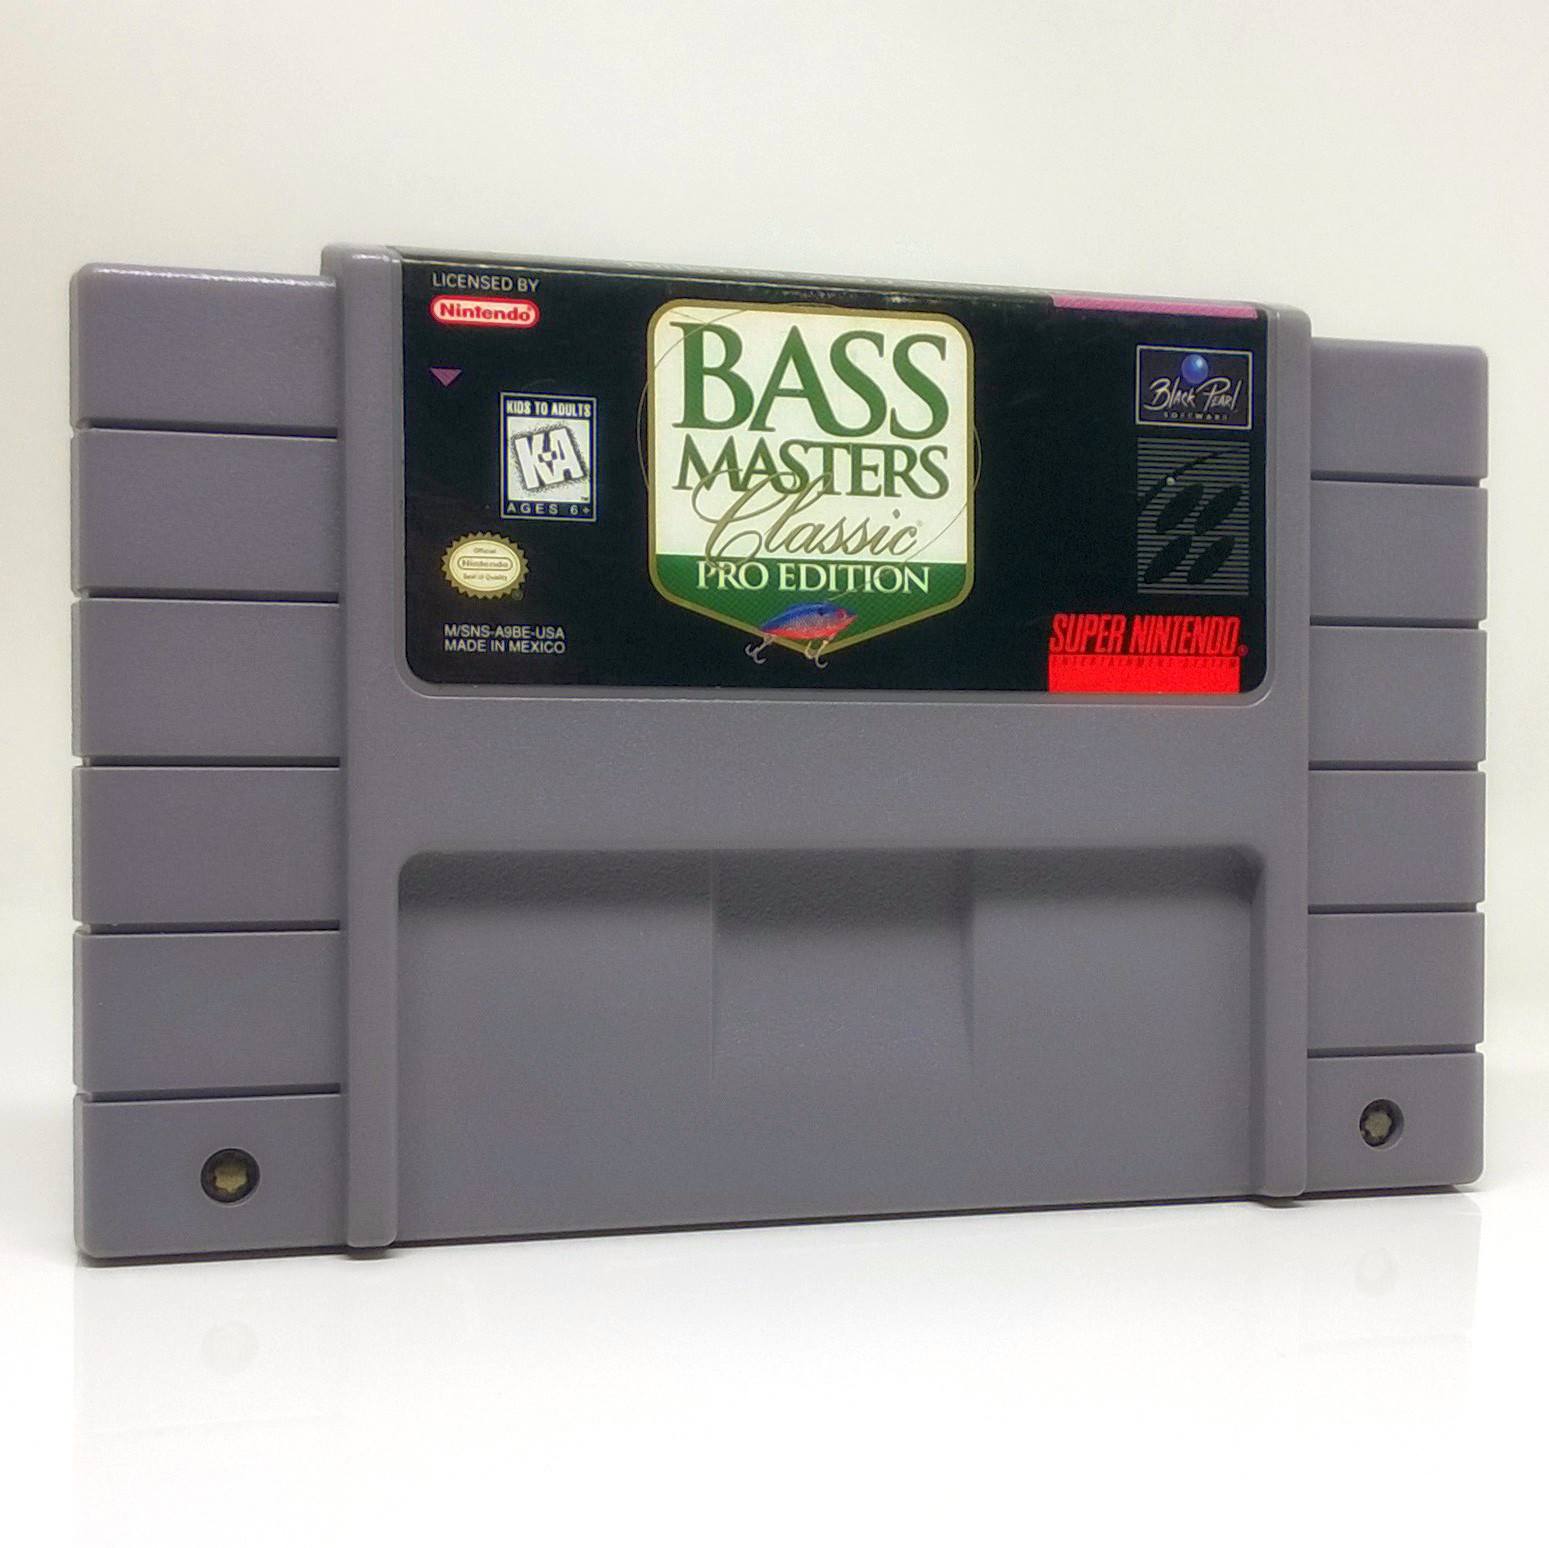 Bass Masters Classic: Pro Edition SNES Super Nintendo Game